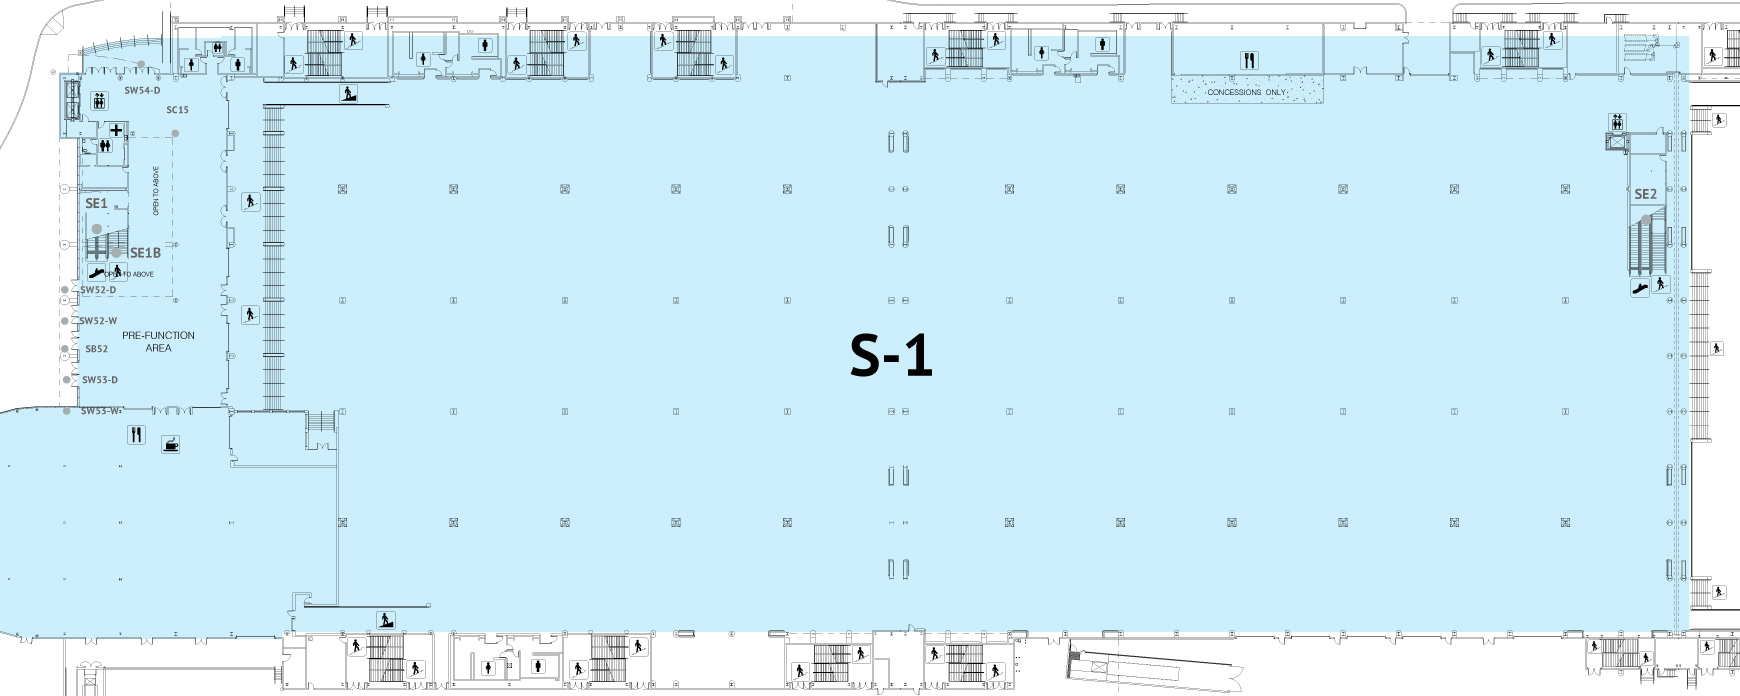 Las Vegas Convention Center floor plan